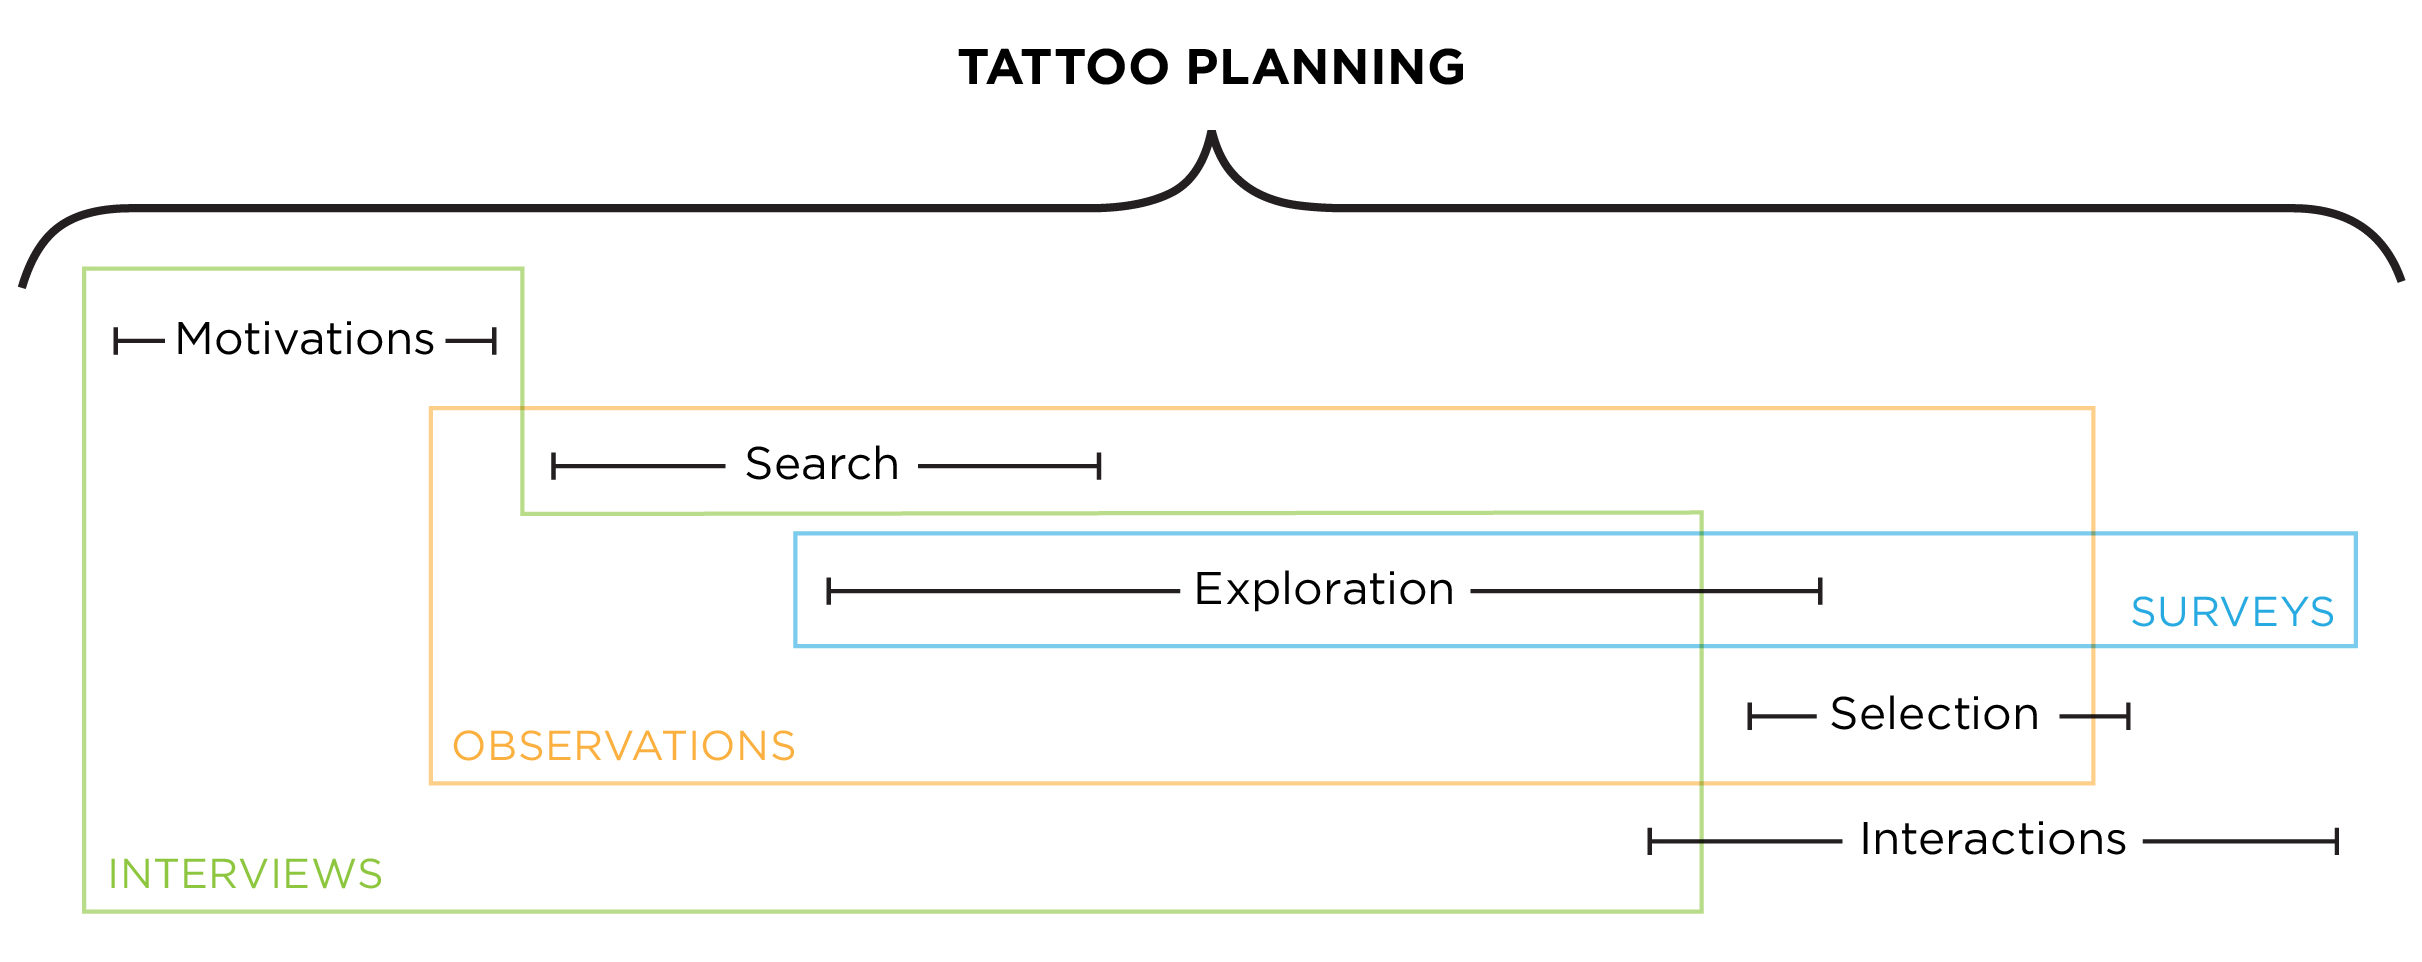 Tattoo Planning Themes